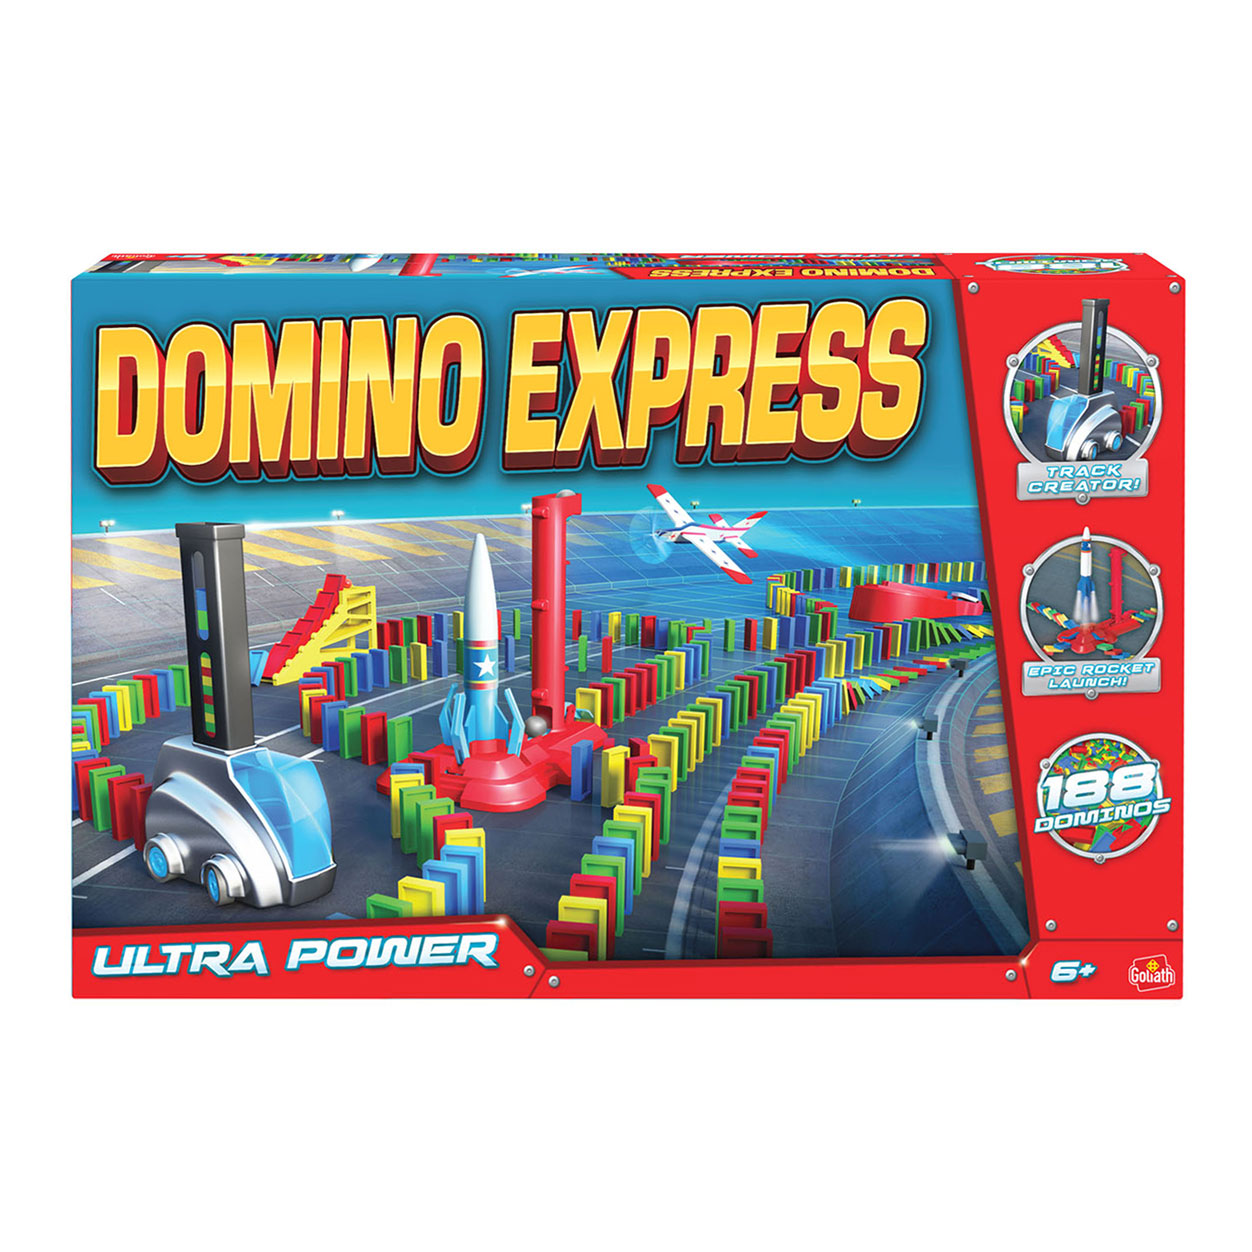 Domino Express Express Ultra Power Top Merken Winkel